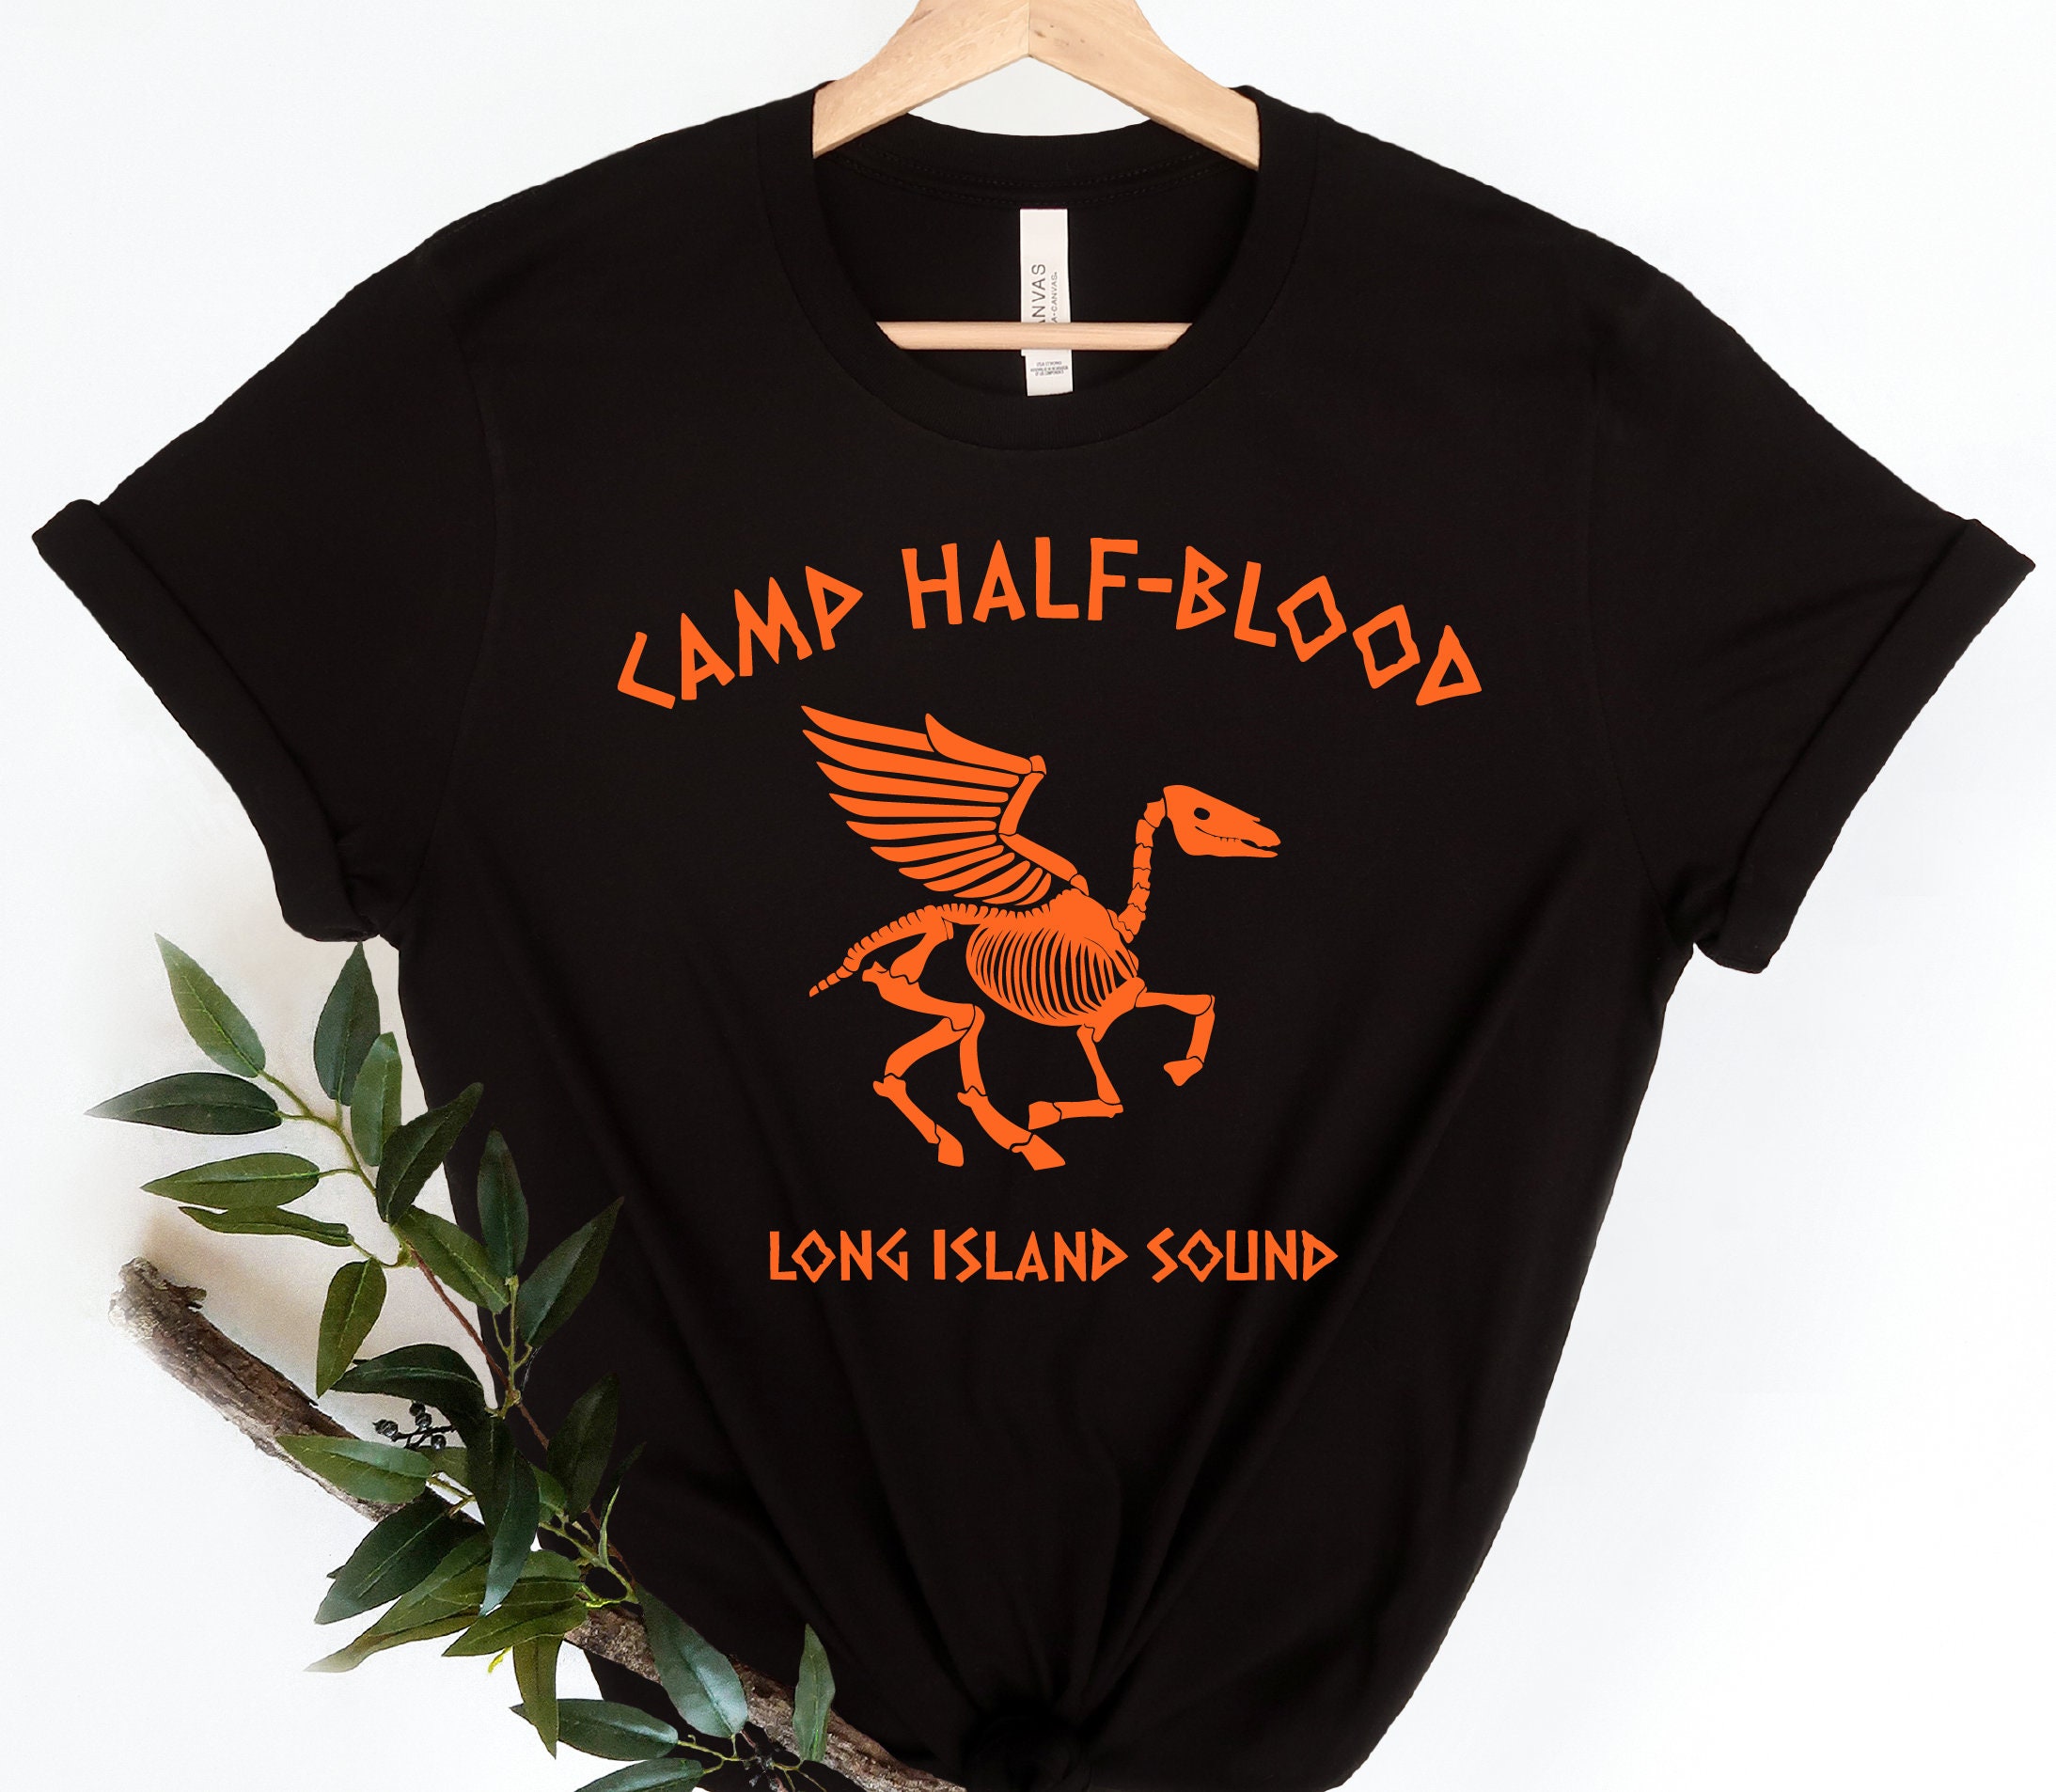 Camp Half Blood Shirt Unisex S-5XL - Inspire Uplift